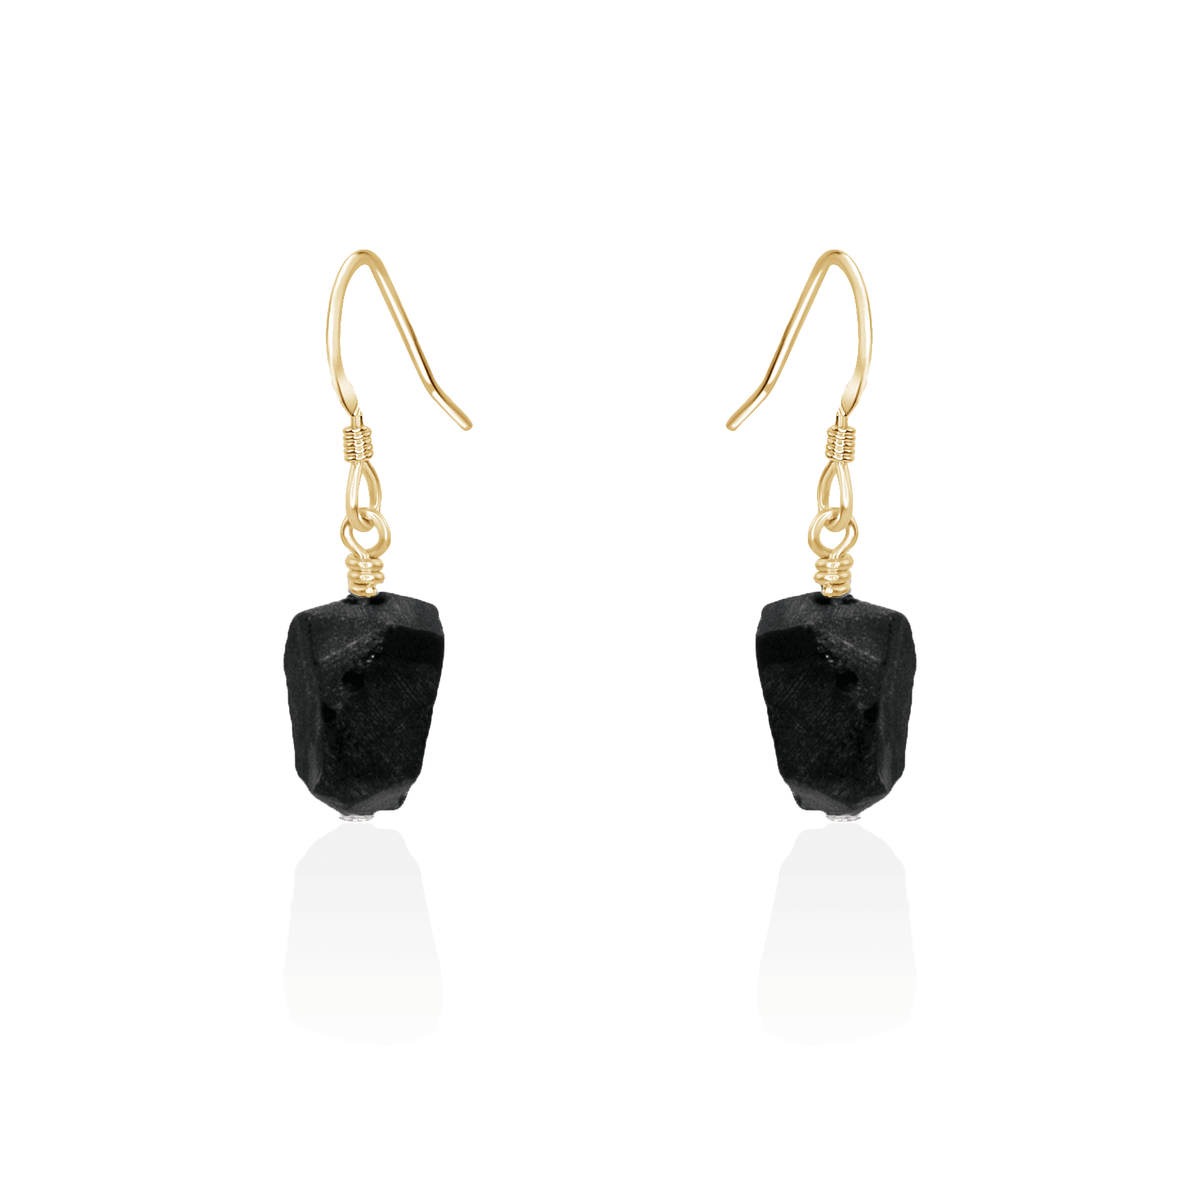 Raw Black Obsidian Crystal Dangle Drop Earrings - Raw Black Obsidian Crystal Dangle Drop Earrings - 14k Gold Fill - Luna Tide Handmade Crystal Jewellery